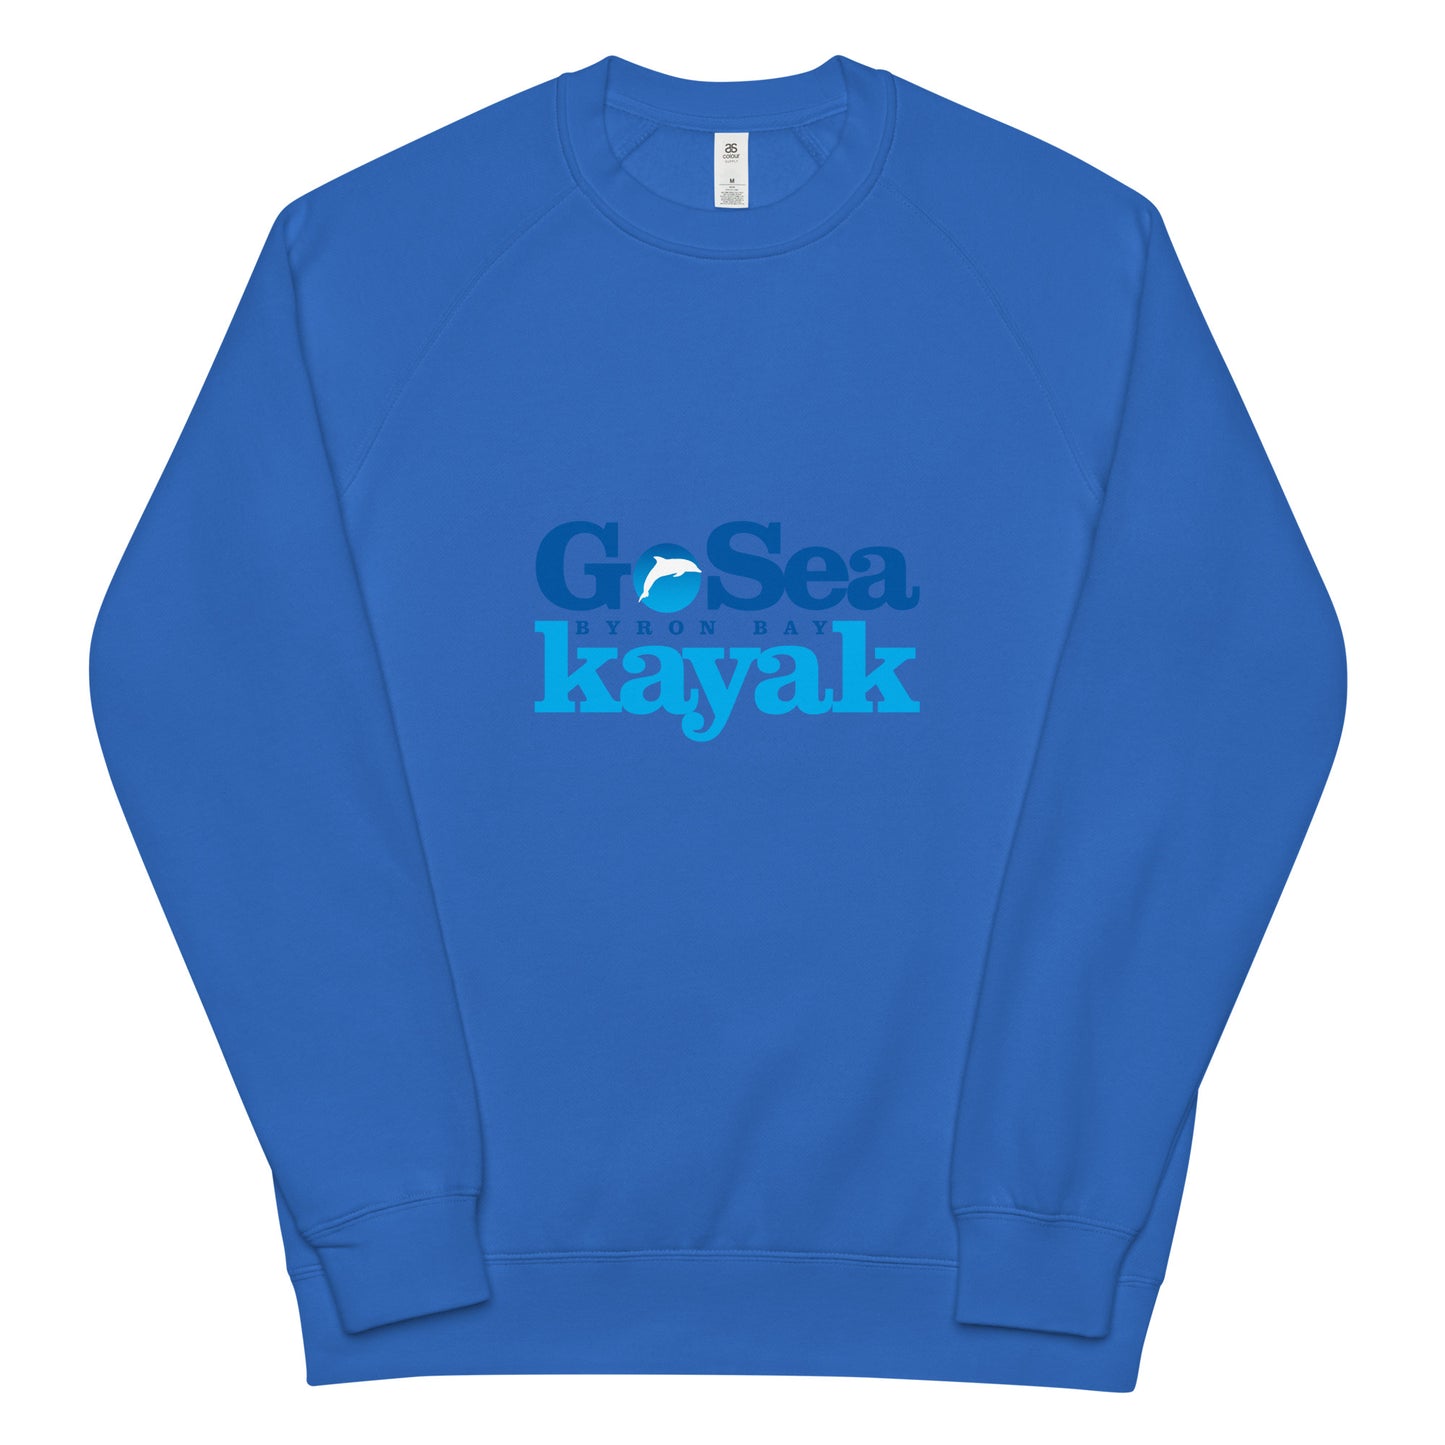  Unisex Sweatshirt - Bright Royal Blue - Front flat lay view - Go Sea Kayak Byron Bay logo on front - Genuine Byron Bay Merchandise | Produced by Go Sea Kayak Byron Bay 